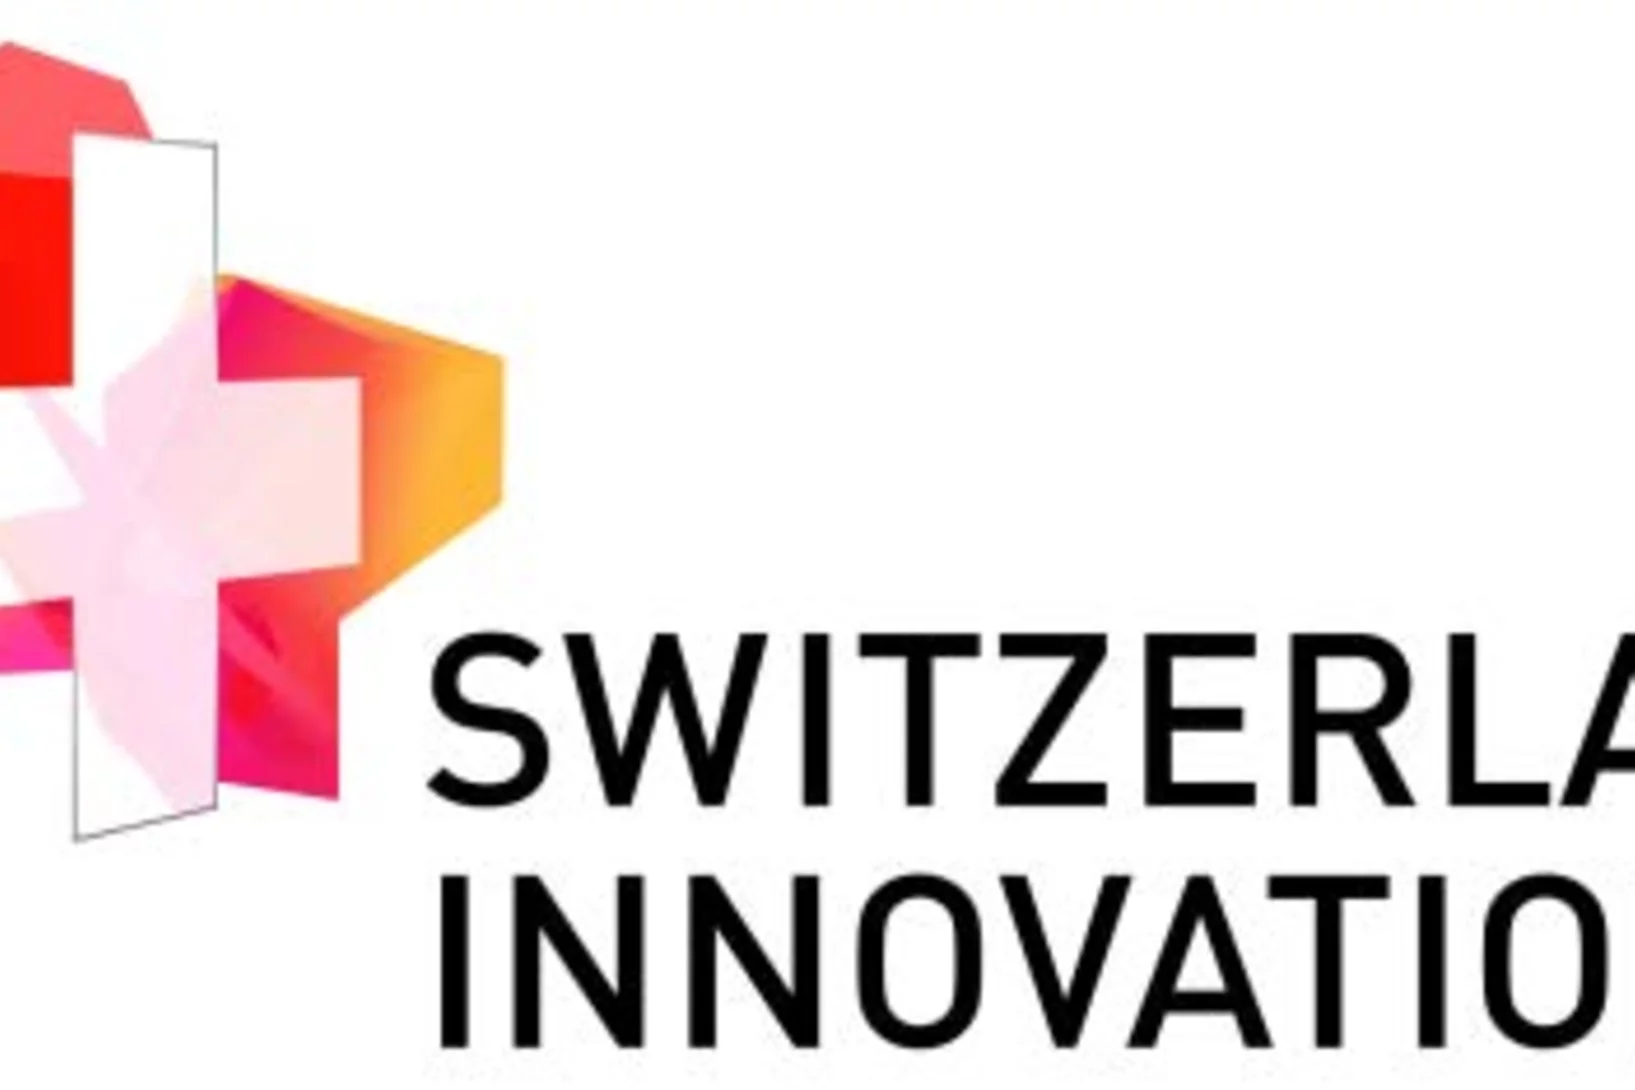 Switzerland Innovation lanciert erste Ausschreibung: Tech4Impact